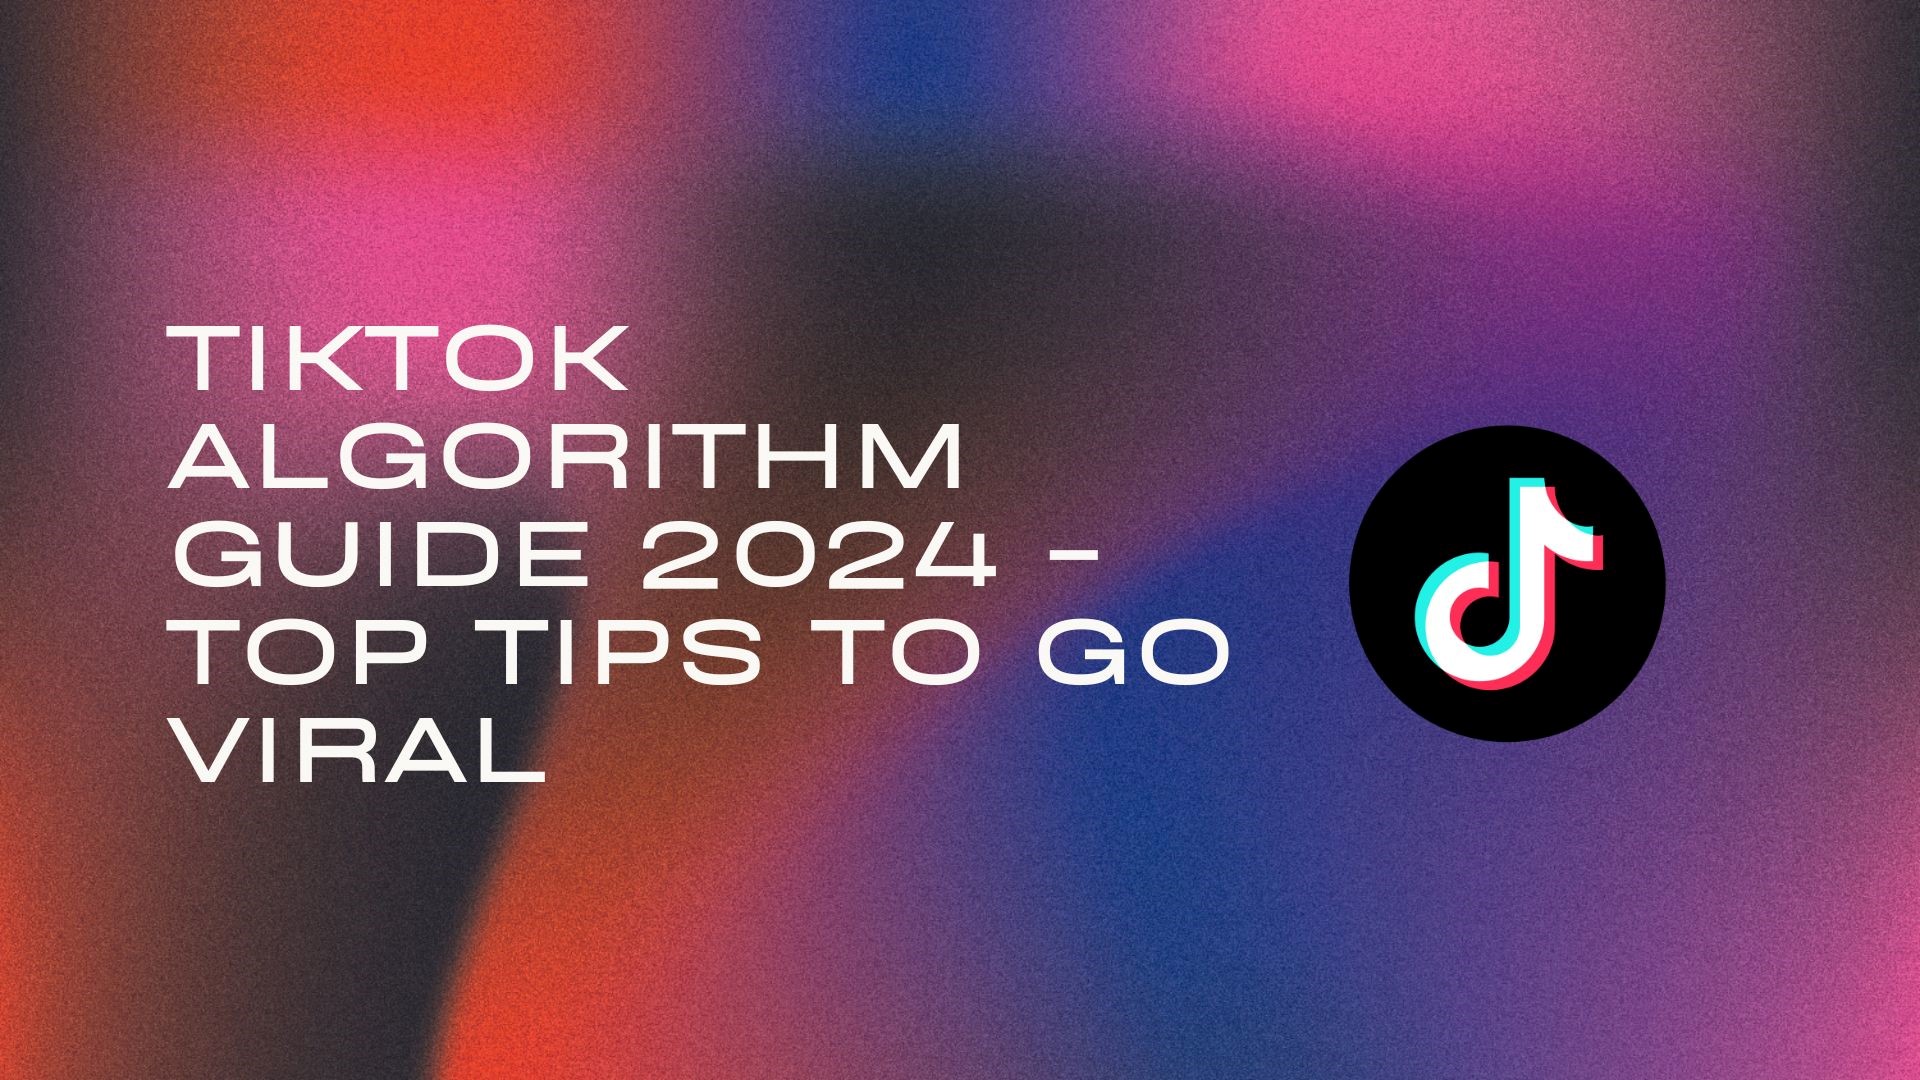 TikTok Algorithm Guide 2024 - TOP Tips to Go Viral